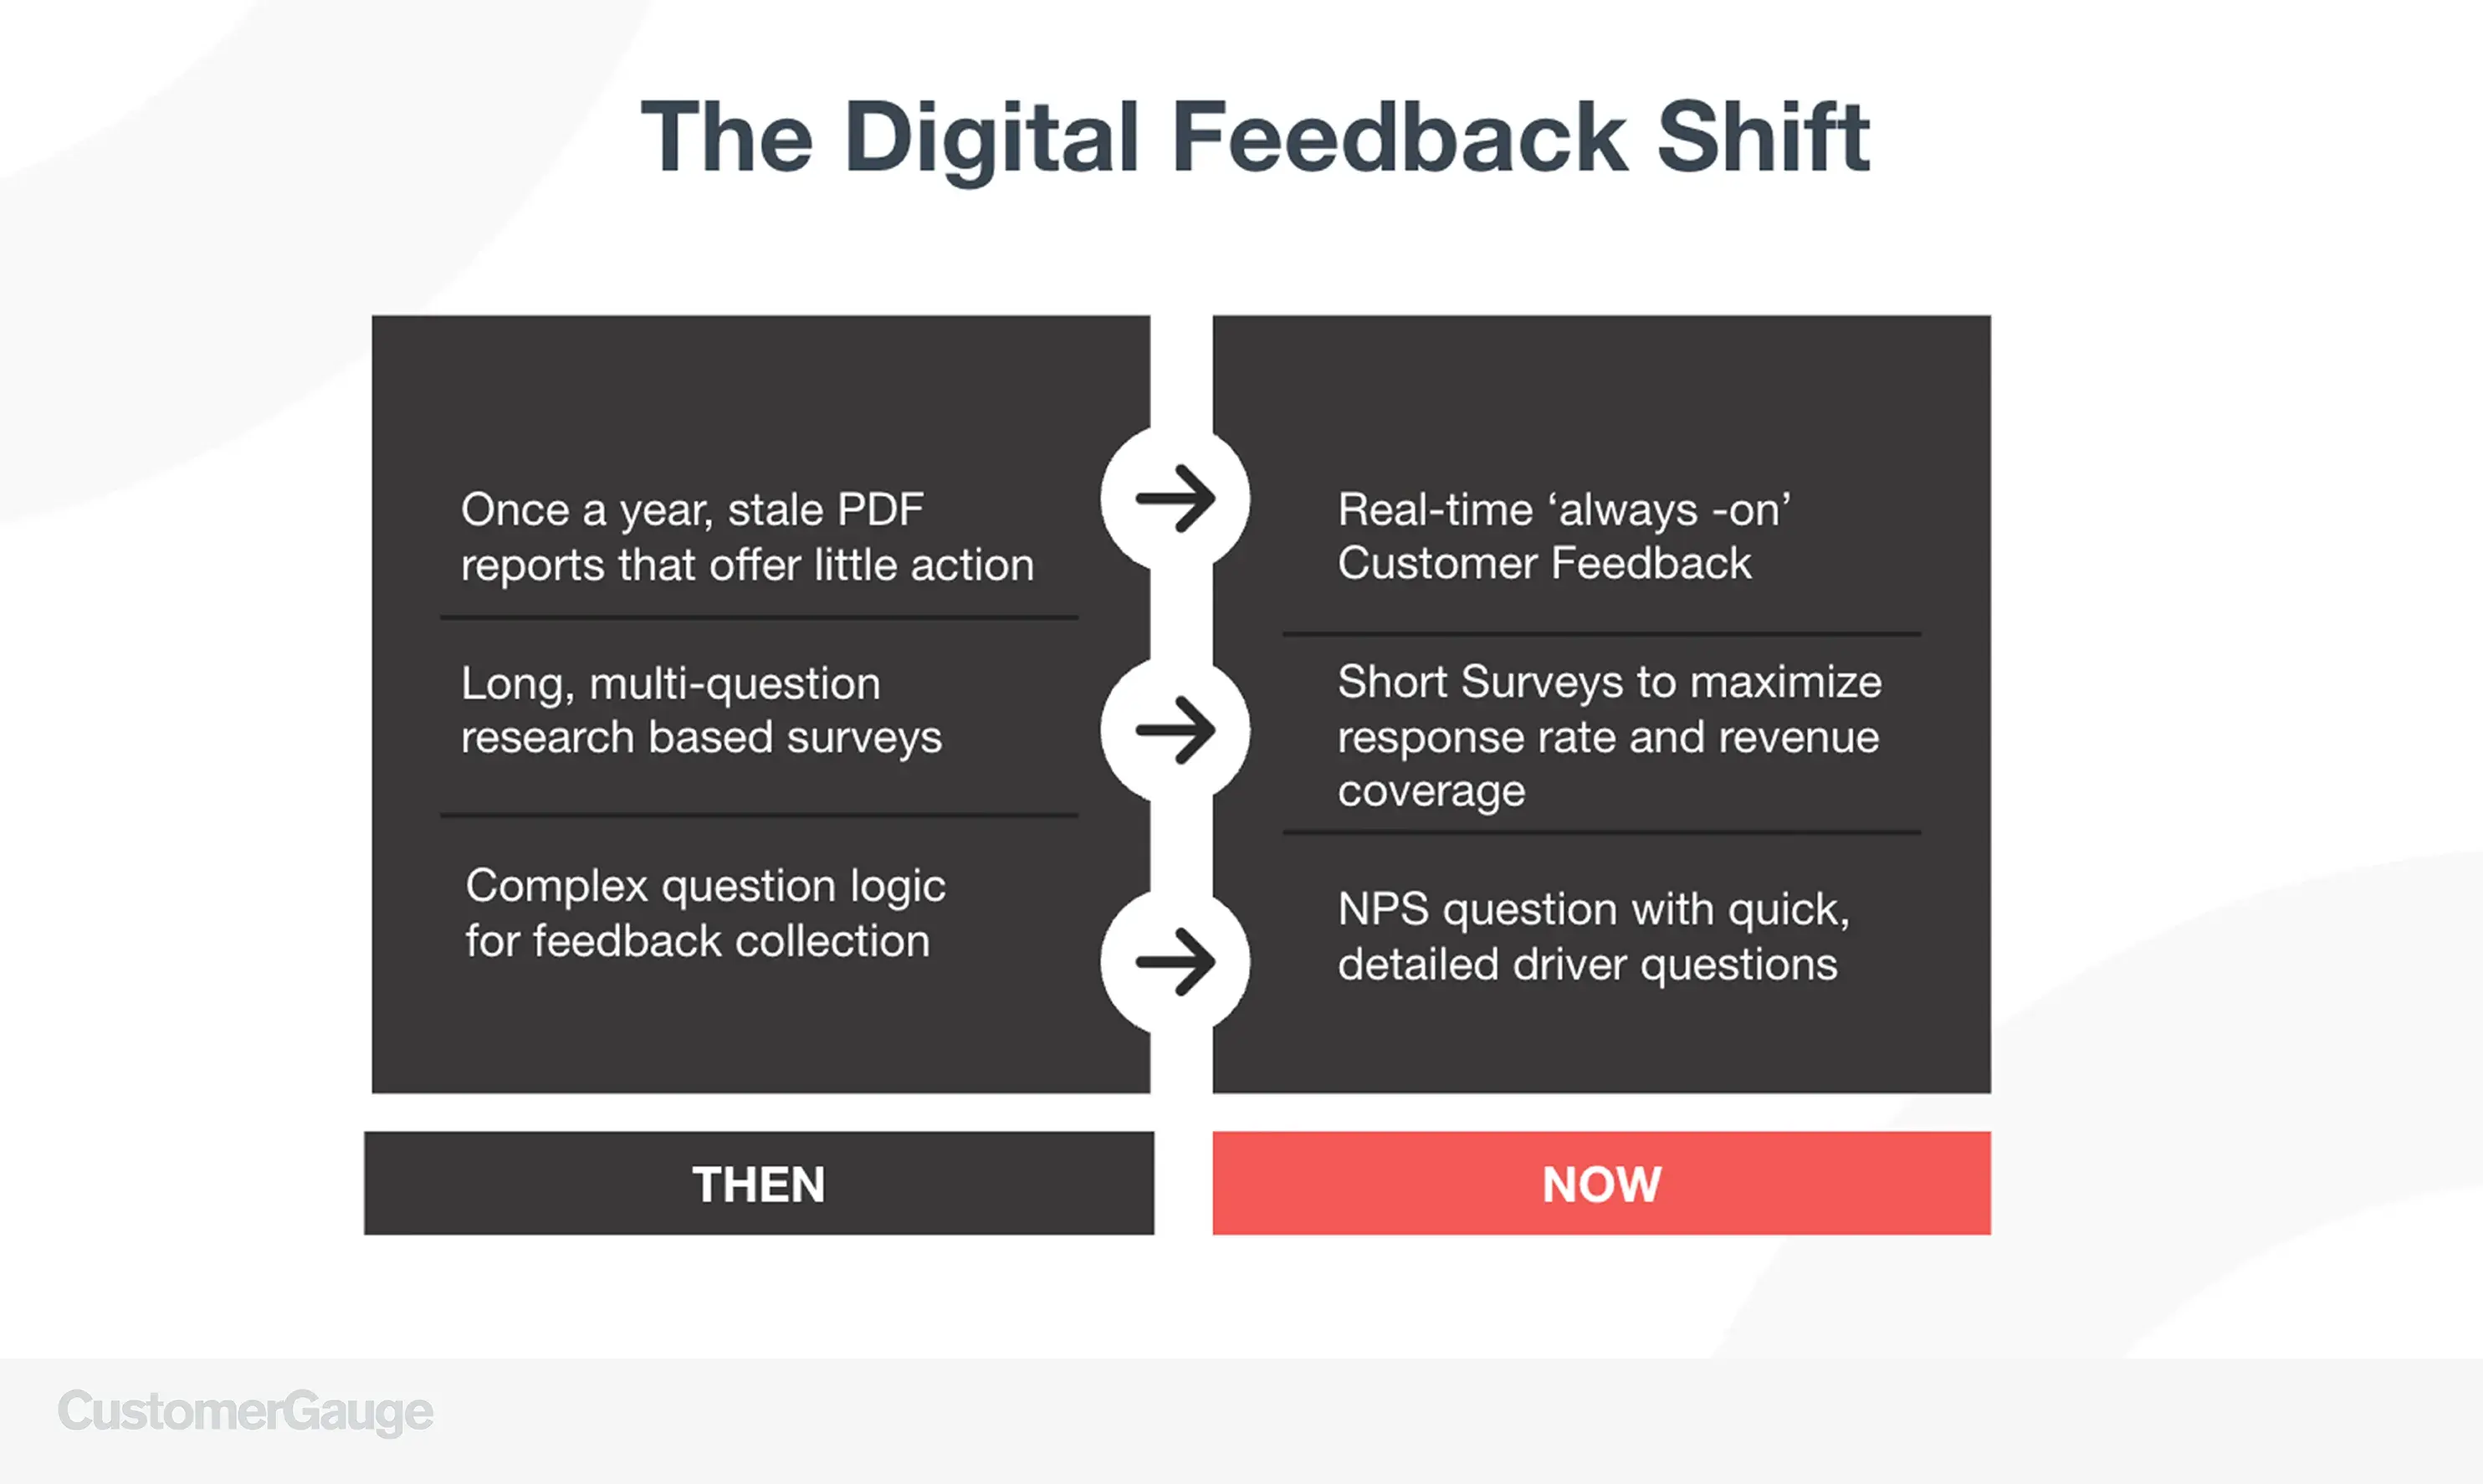 CustomerGauge's Digital Feedback Shift